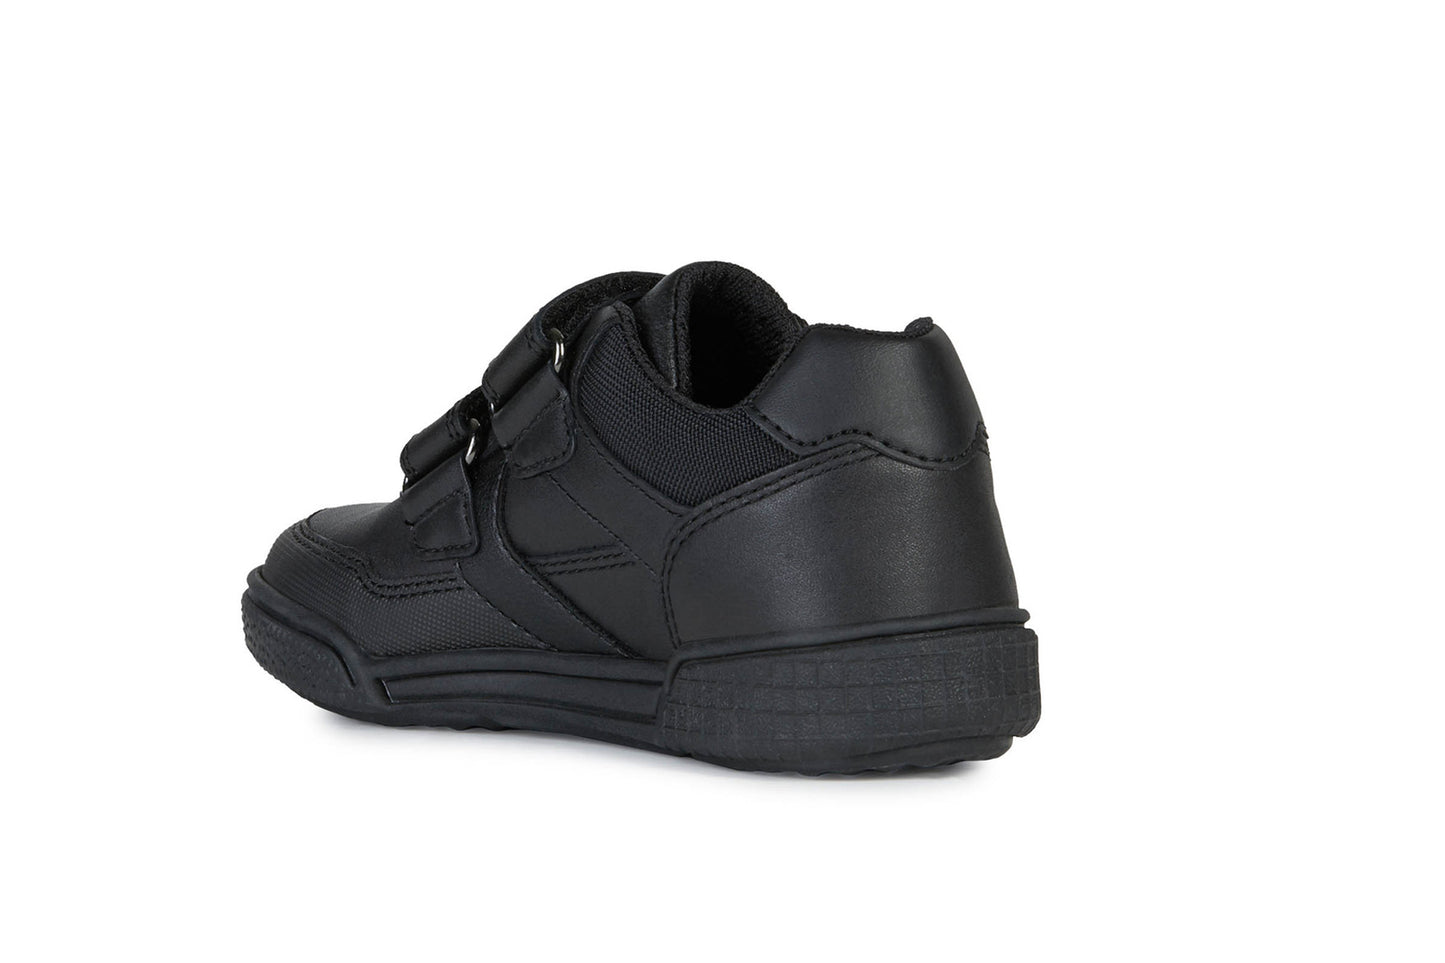 Poseido Black Leather Boys School Shoe